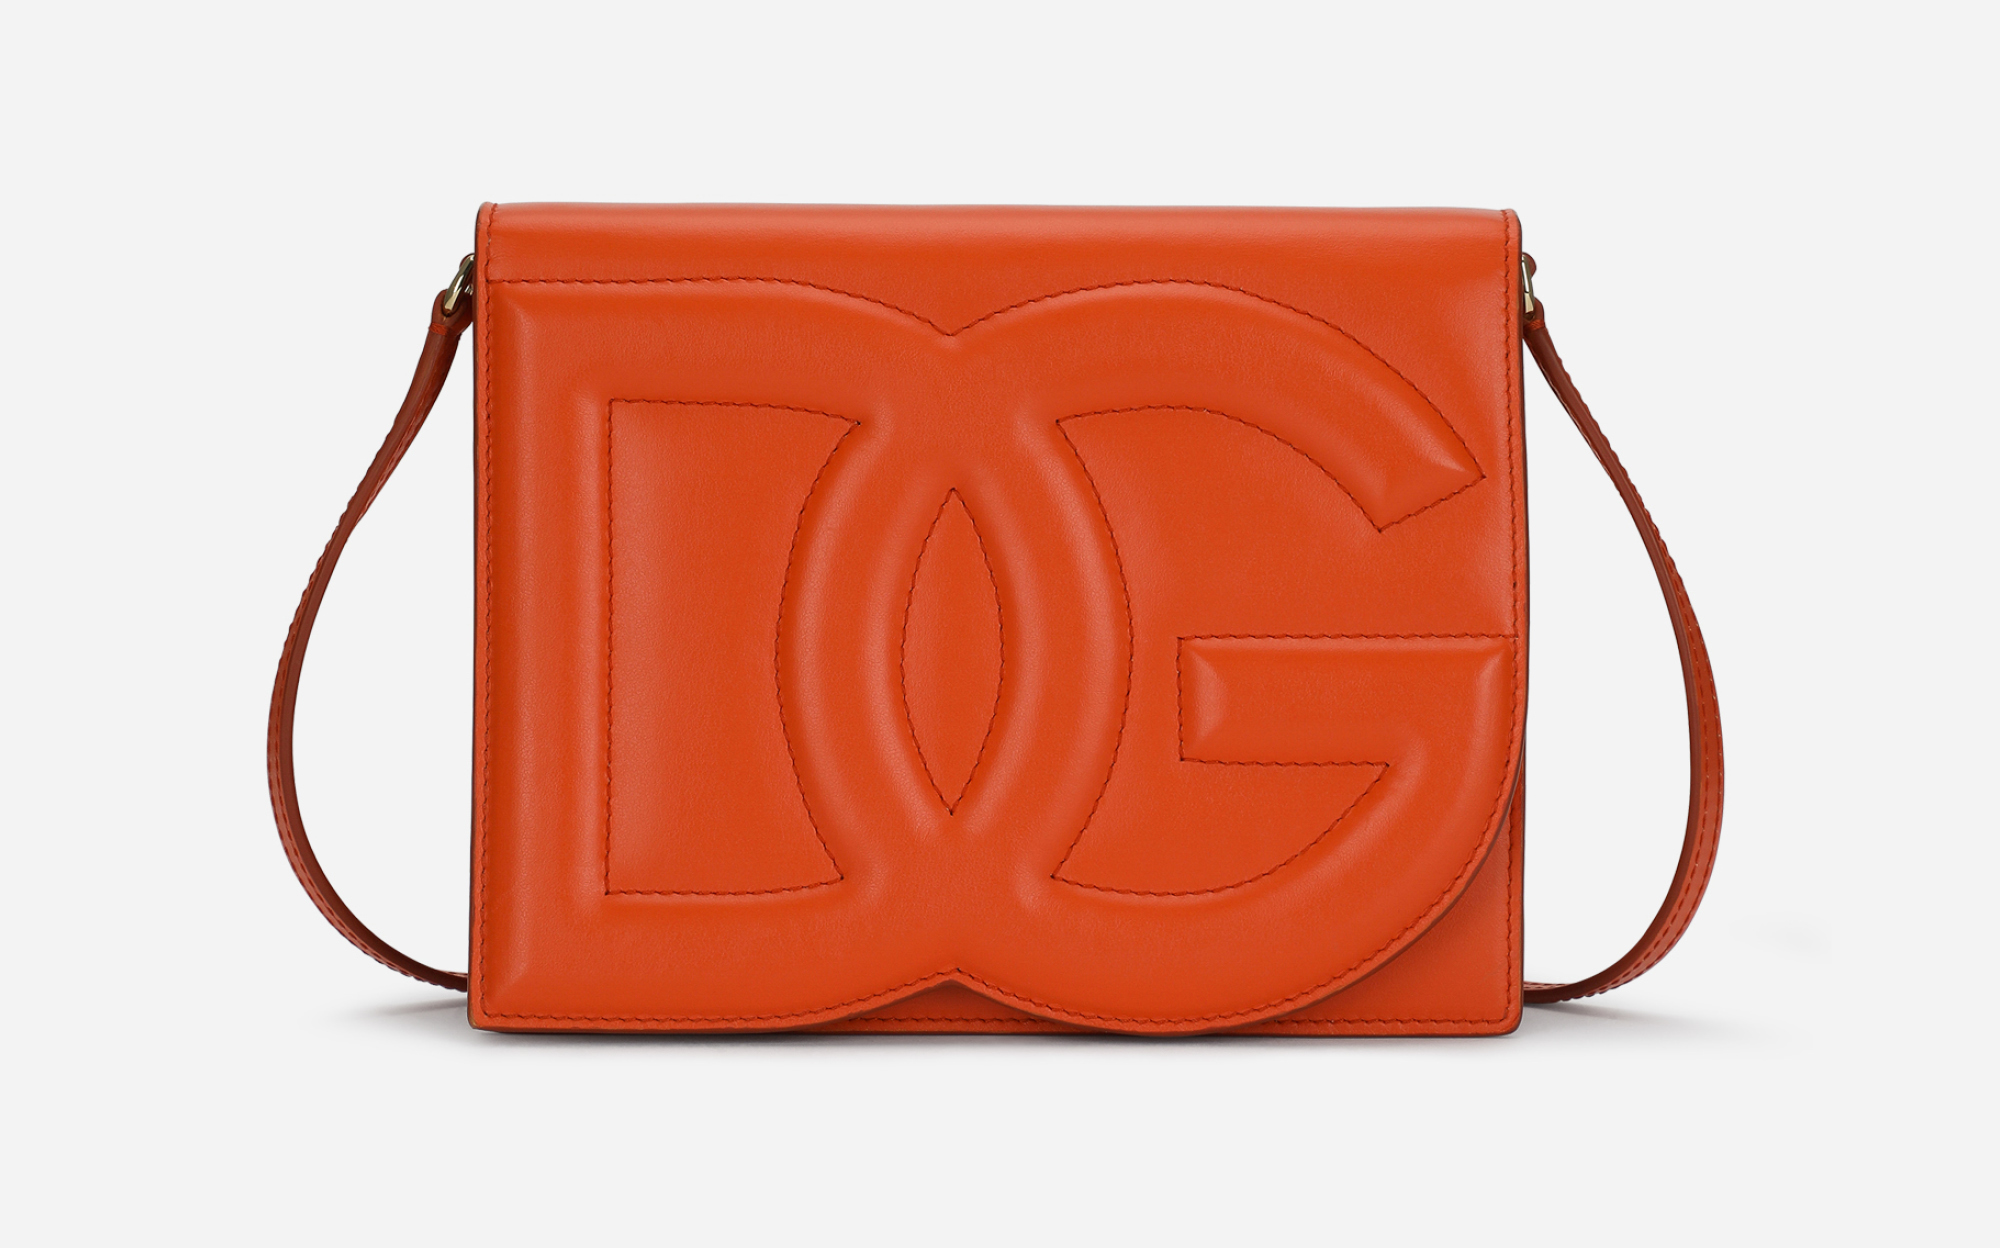 An elegant Dolce & Gabbana bag on offer at the Covent Garden pop-up